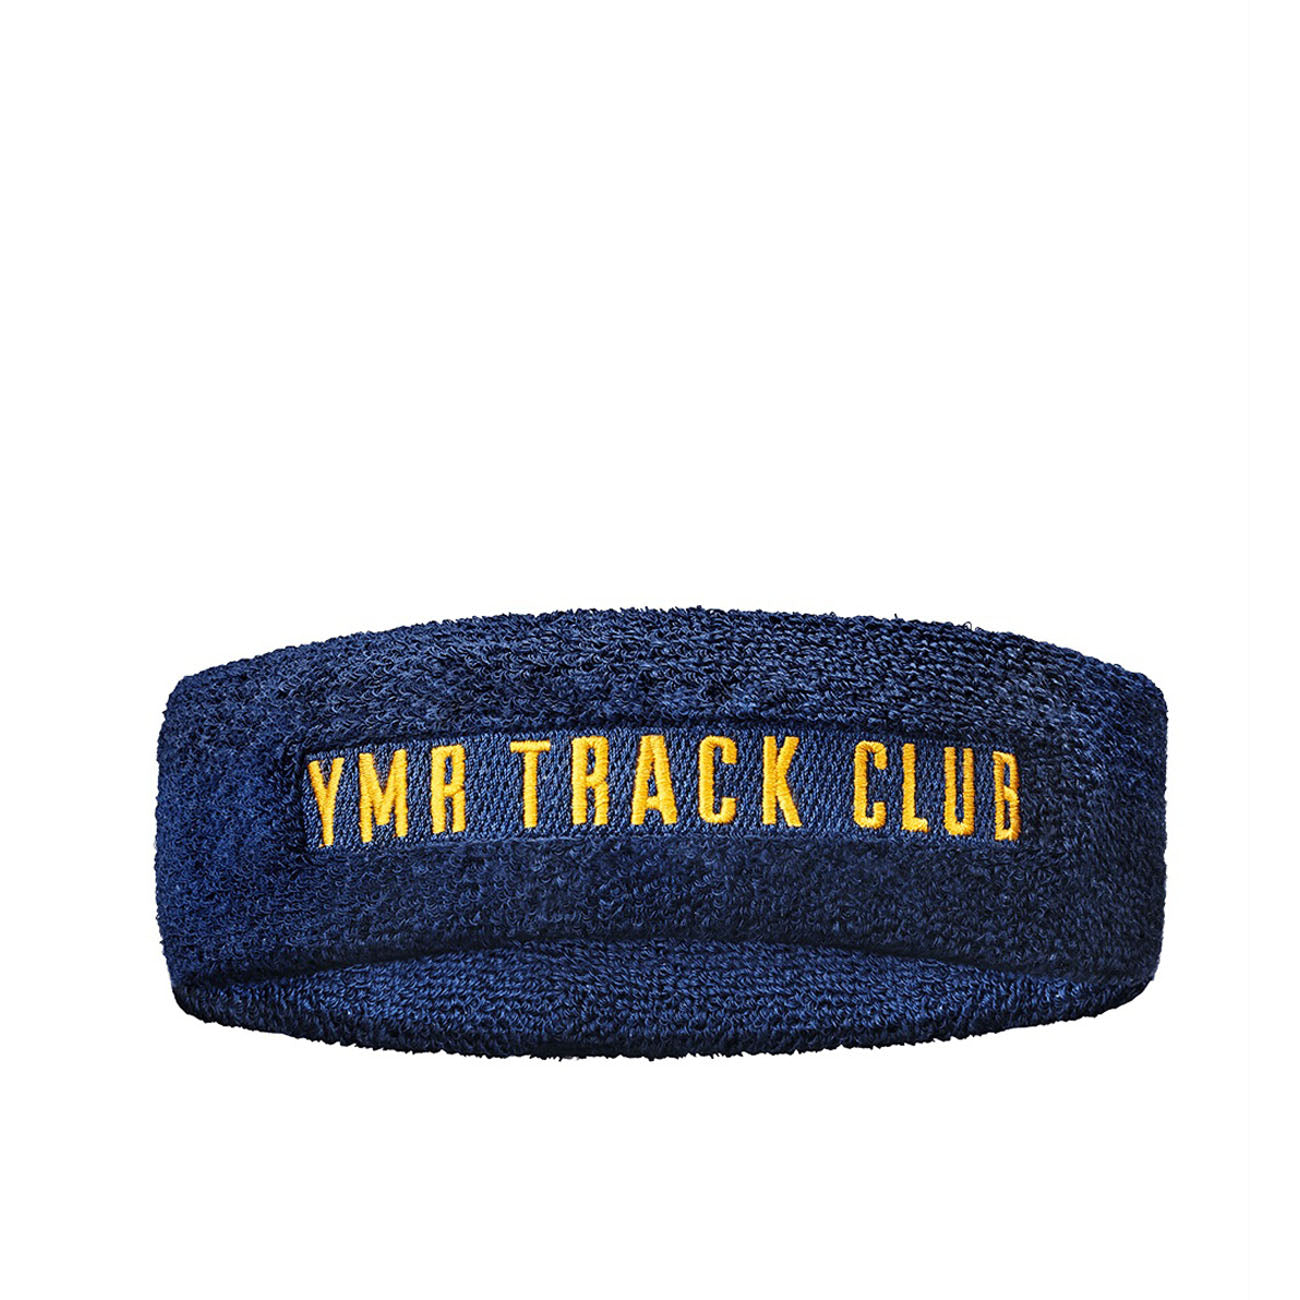 YMR Track Club Head (Bang) Band Navy